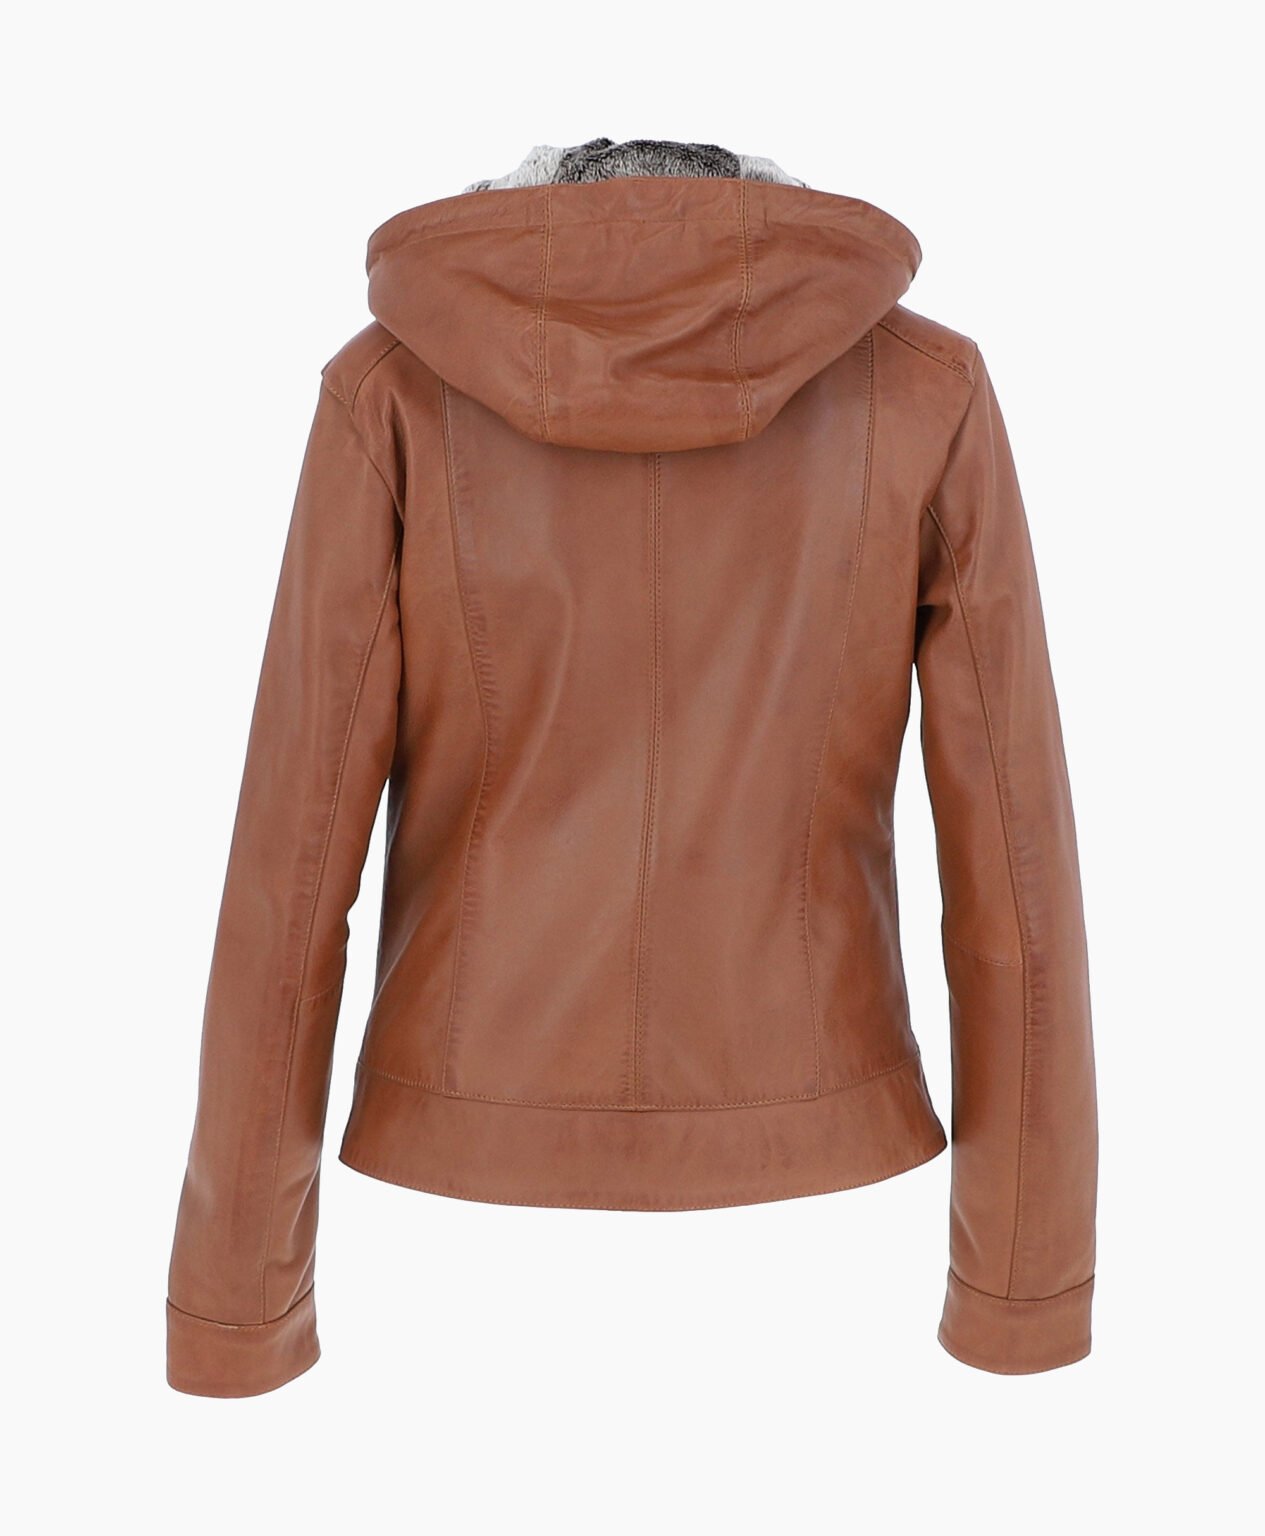 vogue-jacket-leather-hooded-jacket-tan-sarasota-image202